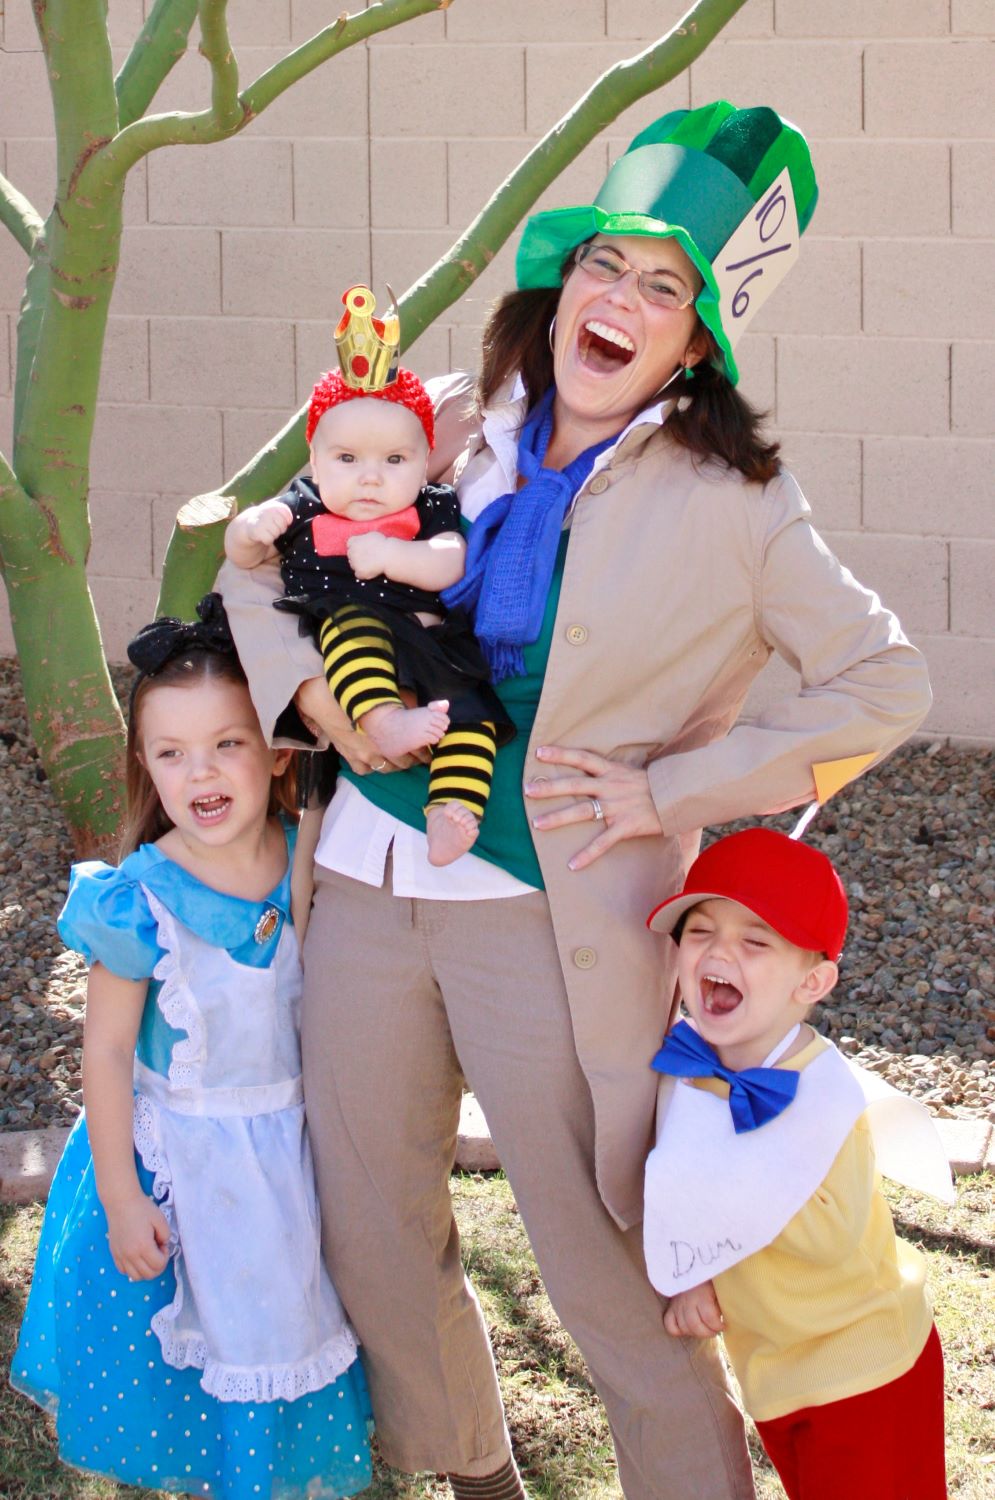 Alice in Wonderland | Family Costume Idea